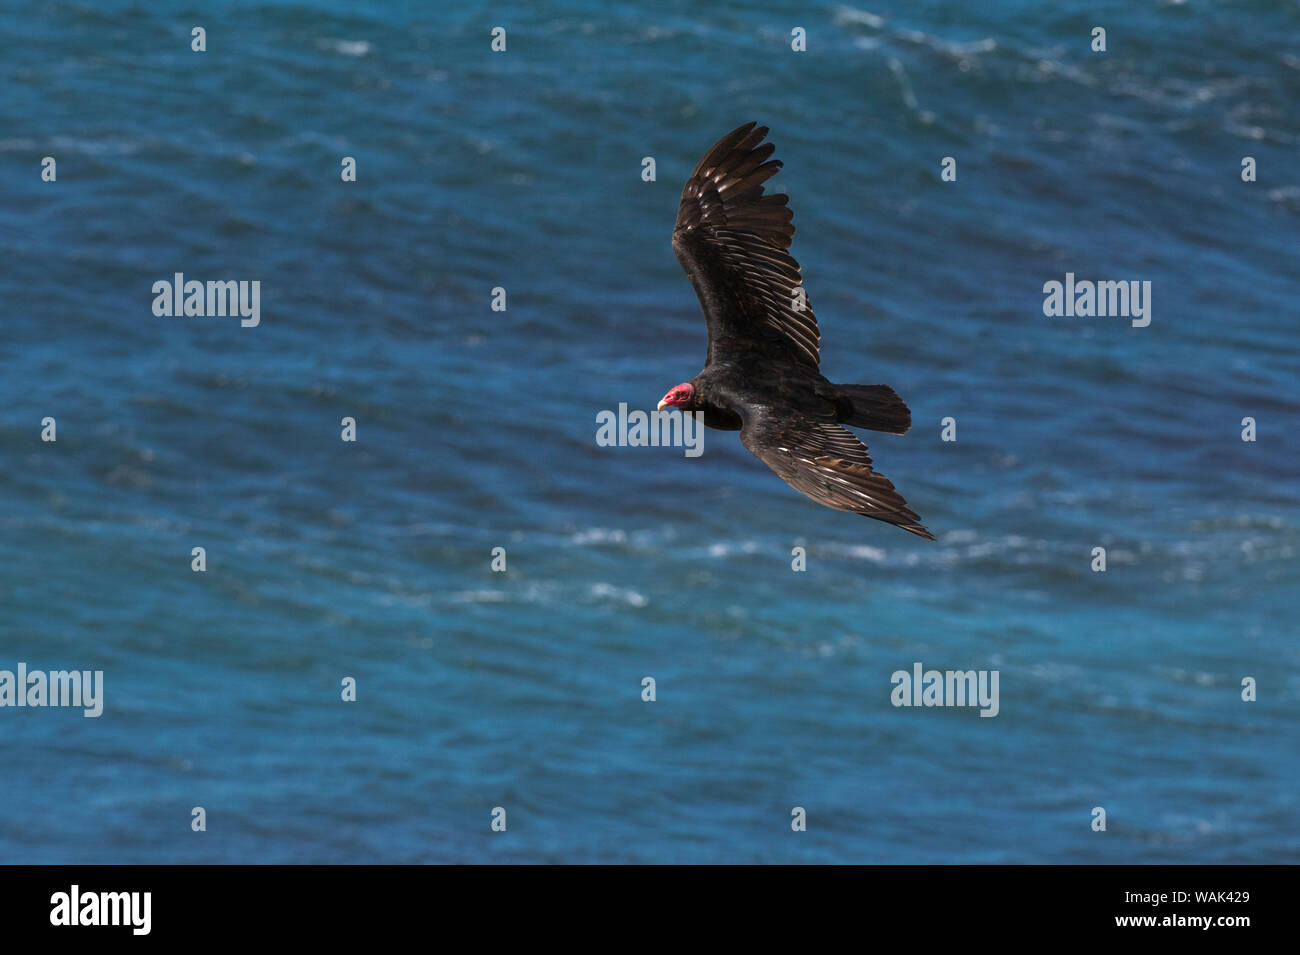 Turkey vulture, Cathartes aura, flying. Stock Photo